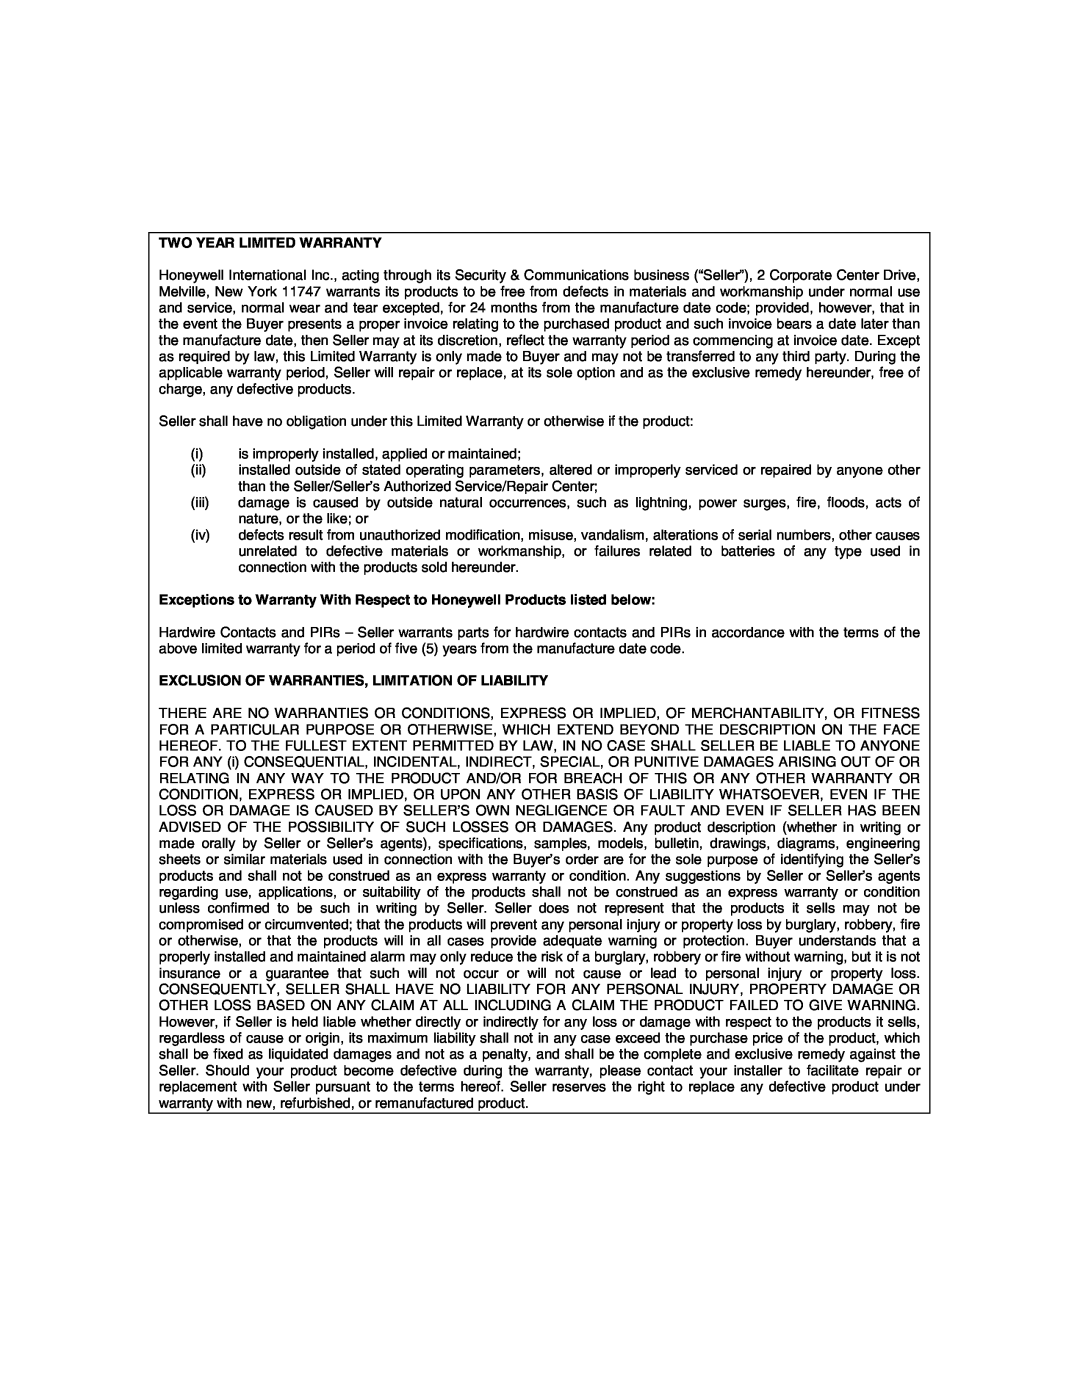 Honeywell VISTA-128FBP, VISTA-250FBP manual Two Year Limited Warranty, Exclusion Of Warranties, Limitation Of Liability 